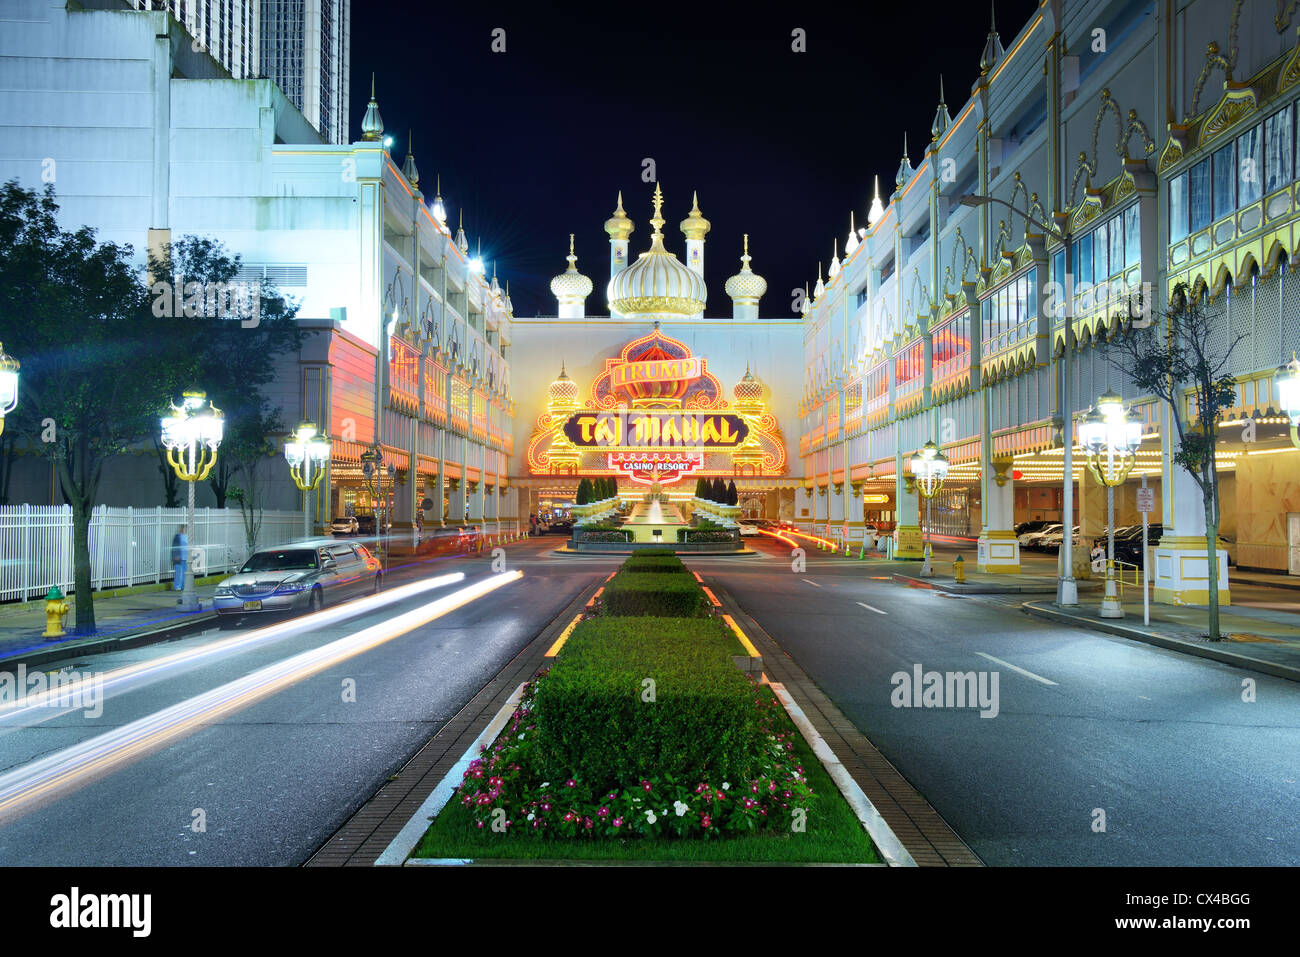 Facciata di Trump Taj Mahal casino di Atlantic City, New Jersey, USA. Foto Stock